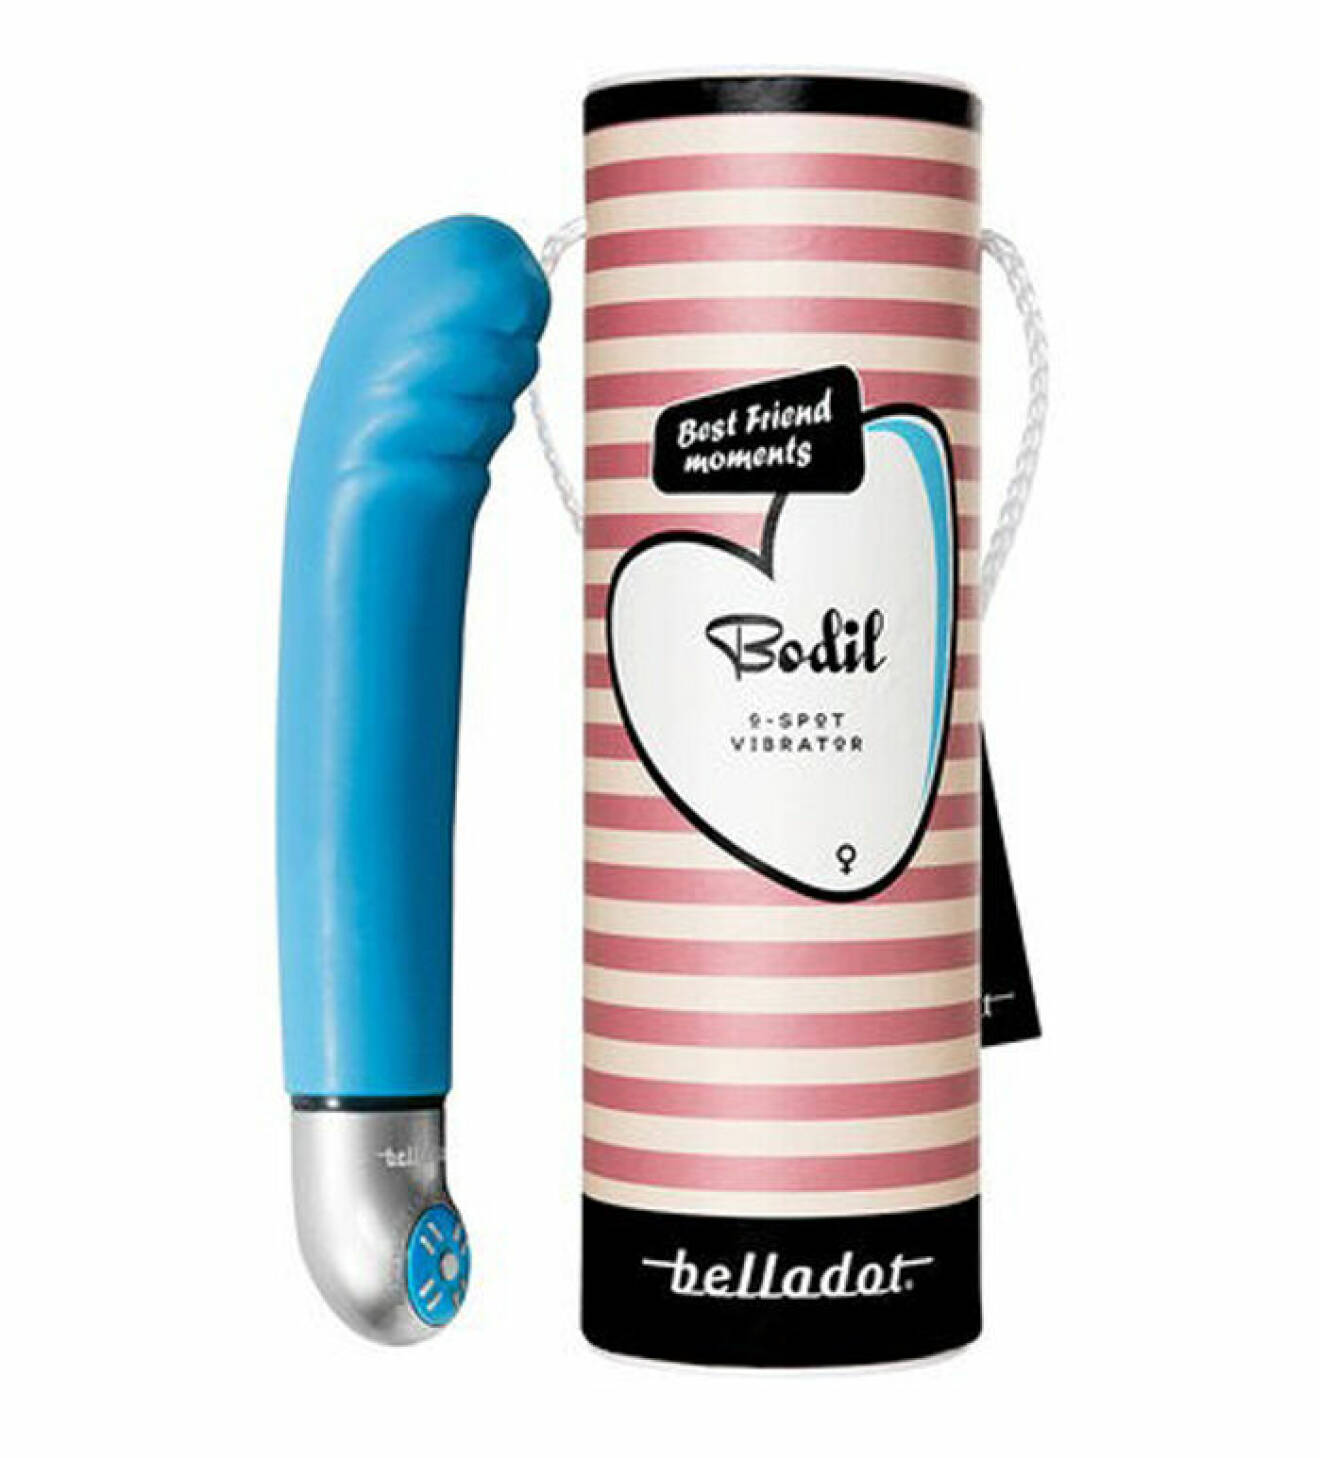 G-punktsvibrator, Bodil G Spot vibrator – Belladot